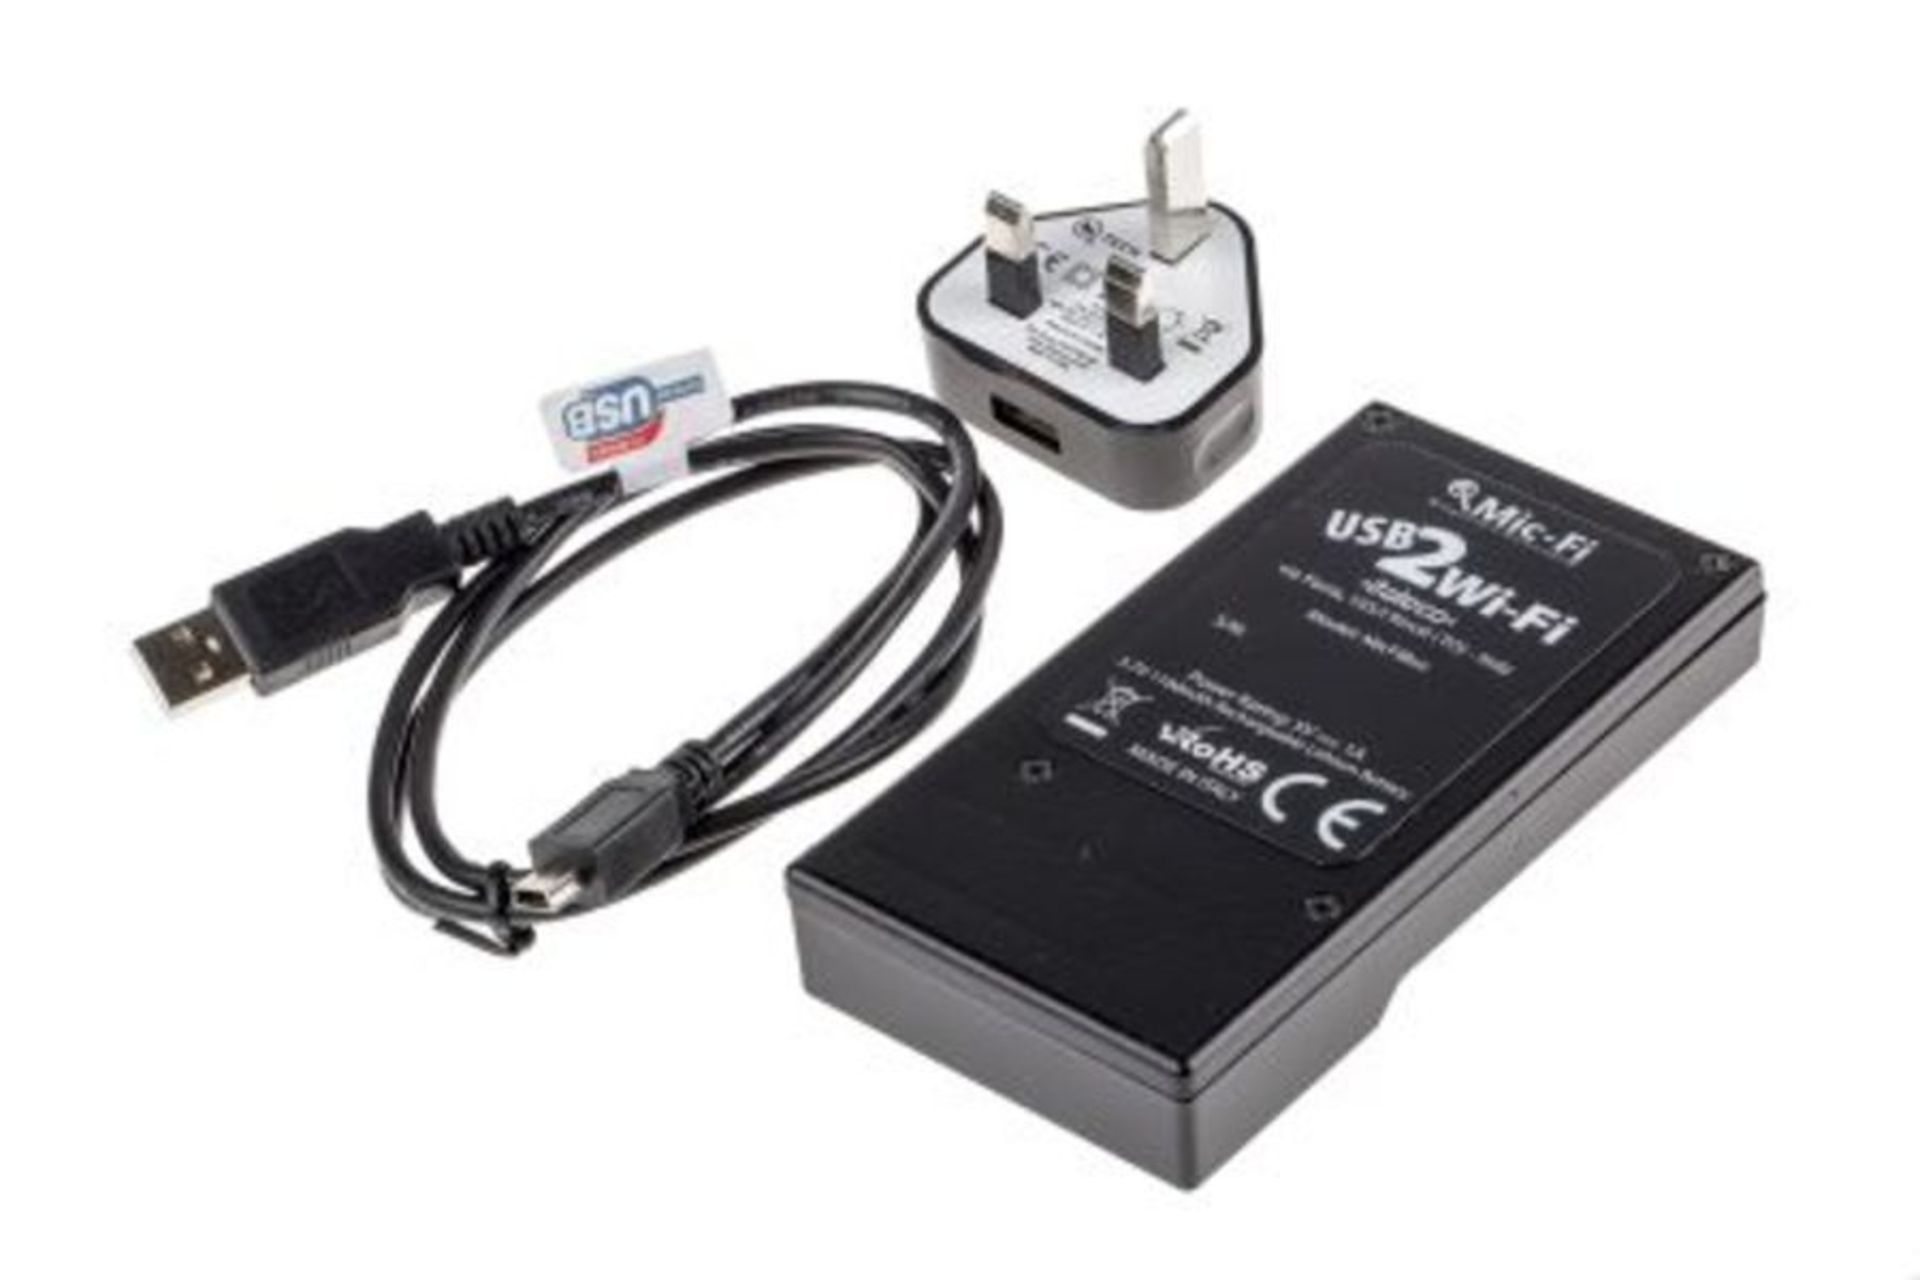 Wi Fi Digi box streamer USB-Wi-Fi - Microscope / Endoscope / Eyepiece Camera - Image 2 of 4